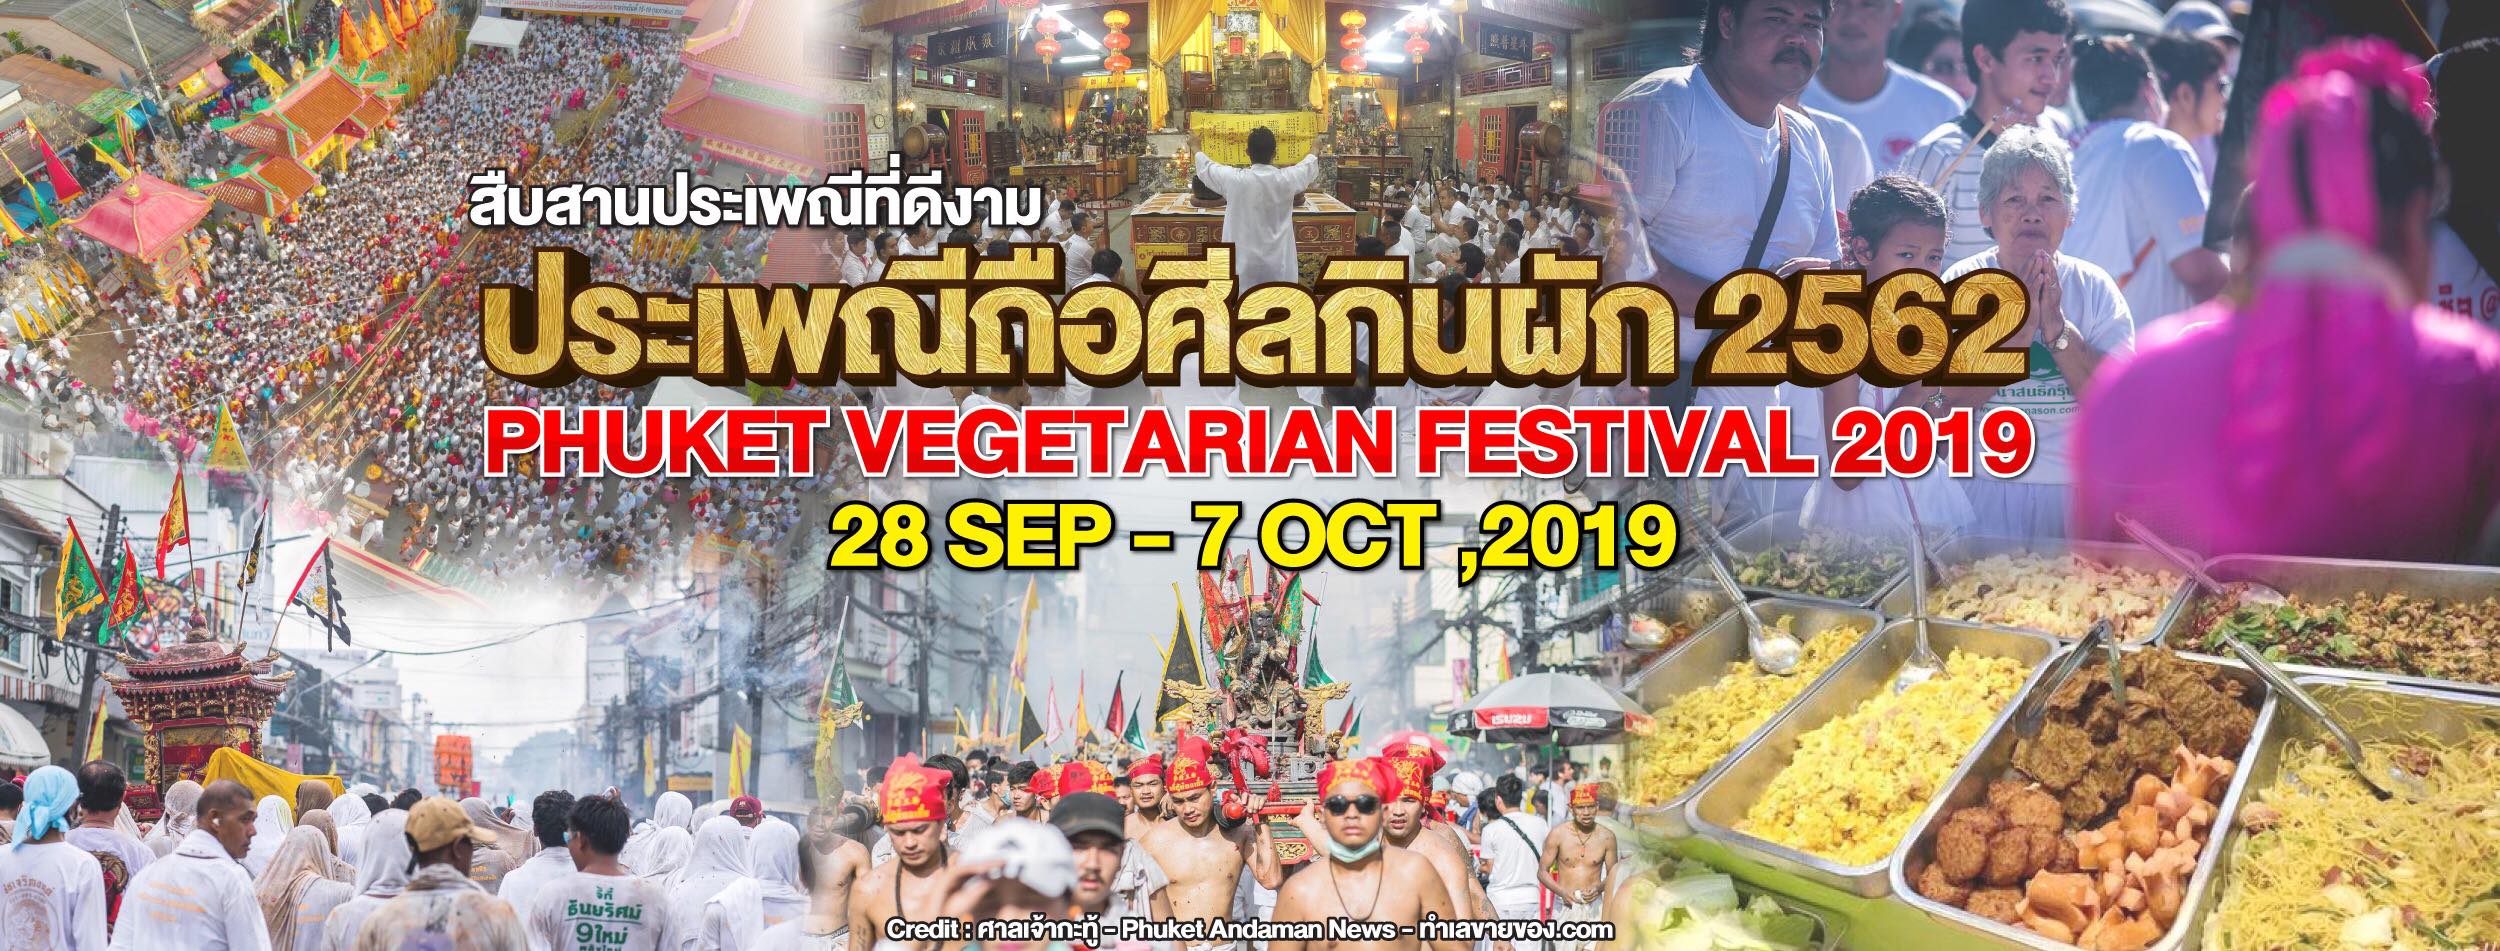 Festival Végétarien 2019 - Phuket Vegetarian Festival